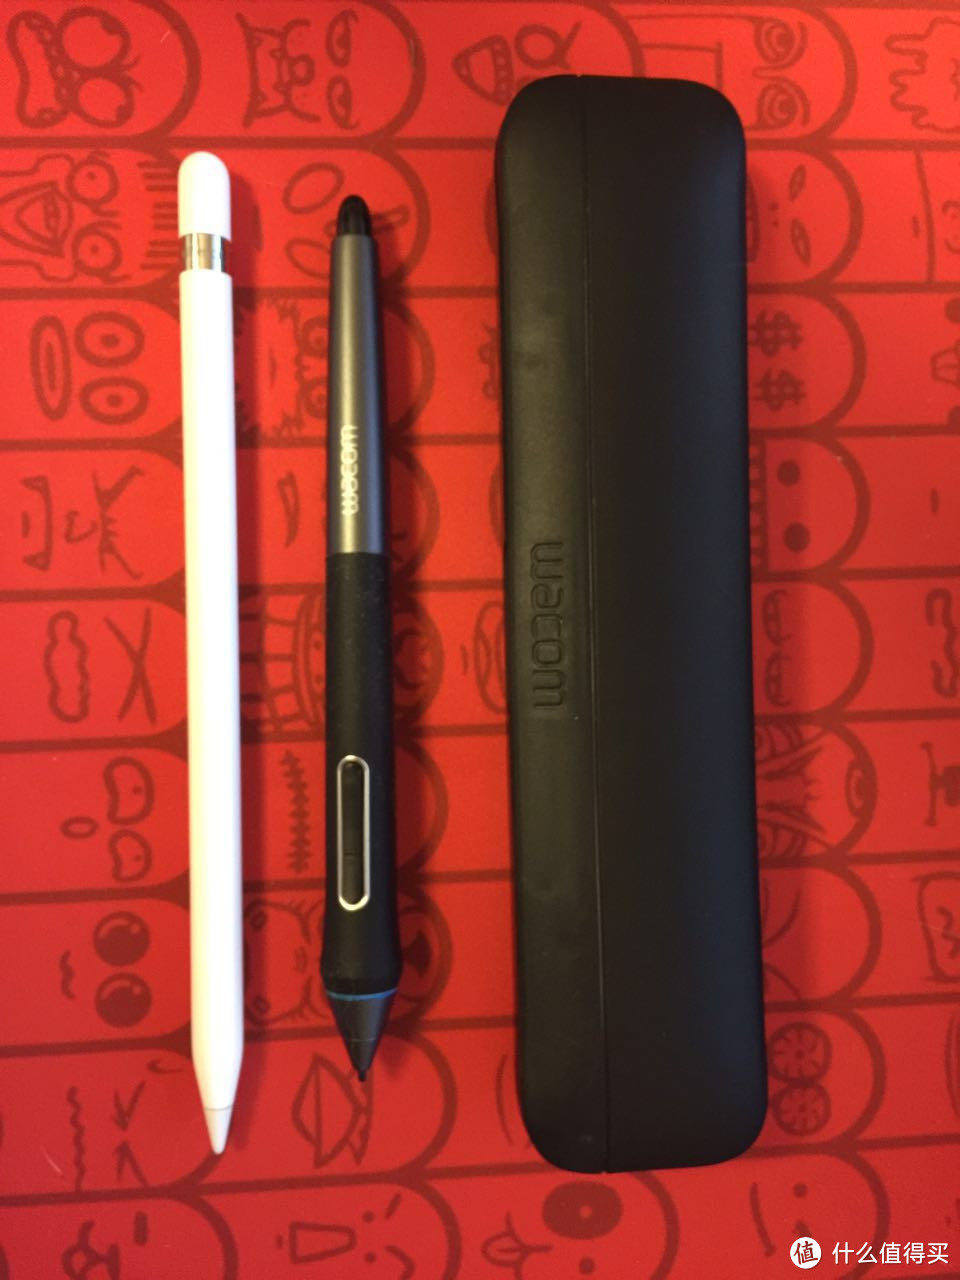 IPAD PRO 12寸 平板电脑 + Pencil 手写笔 速写评测